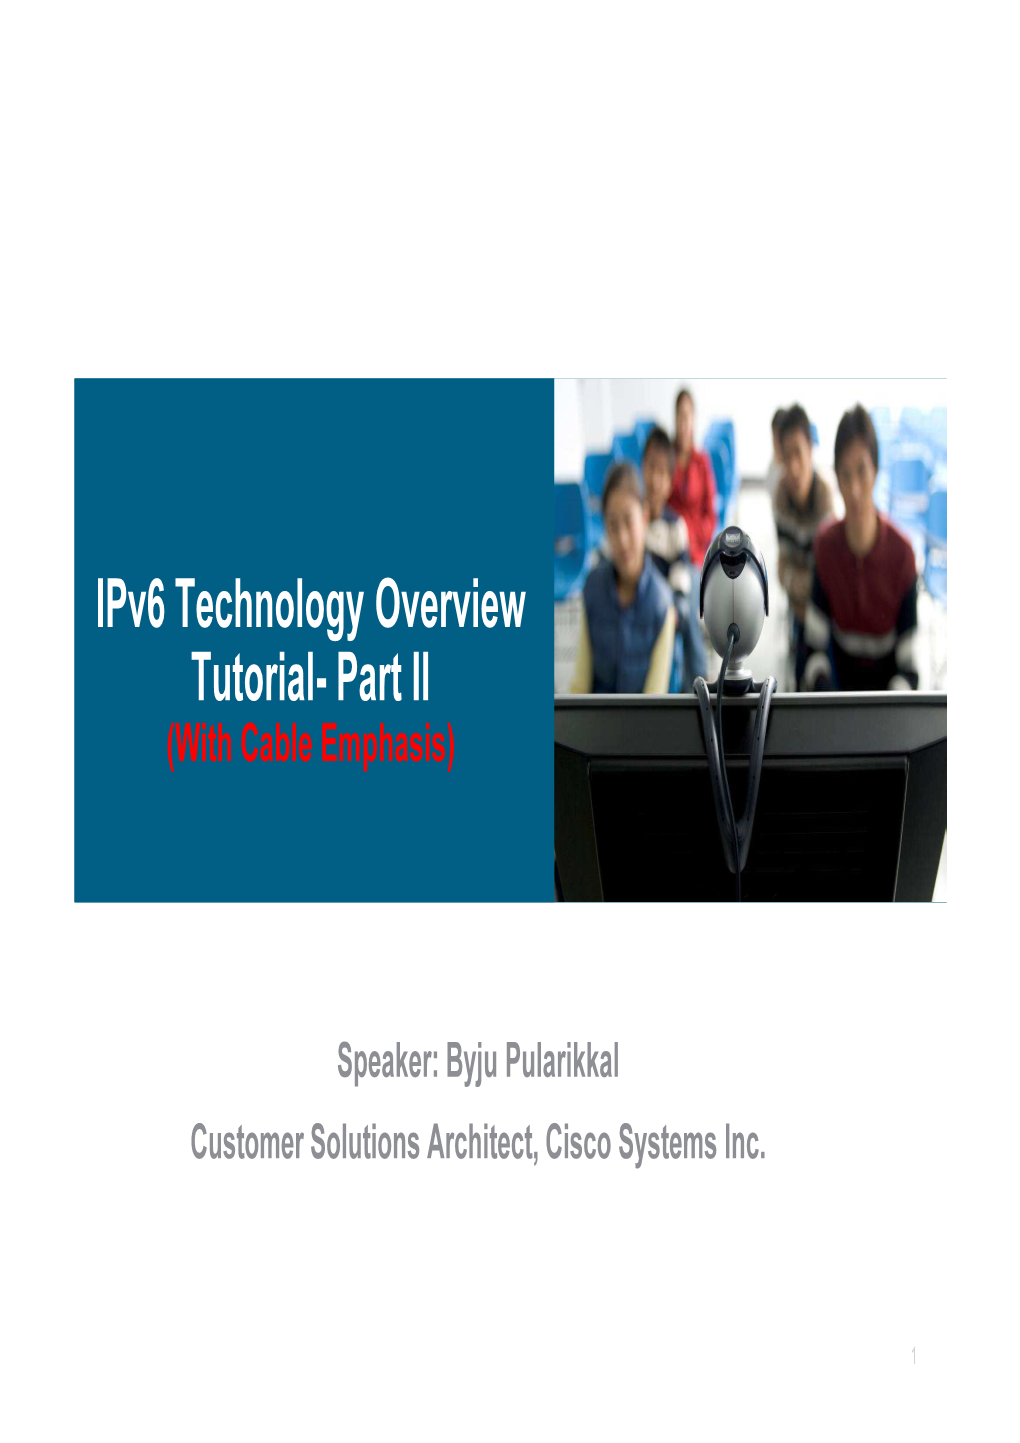 Ipv6 Technology Overview Tutorial Part II(PDF)